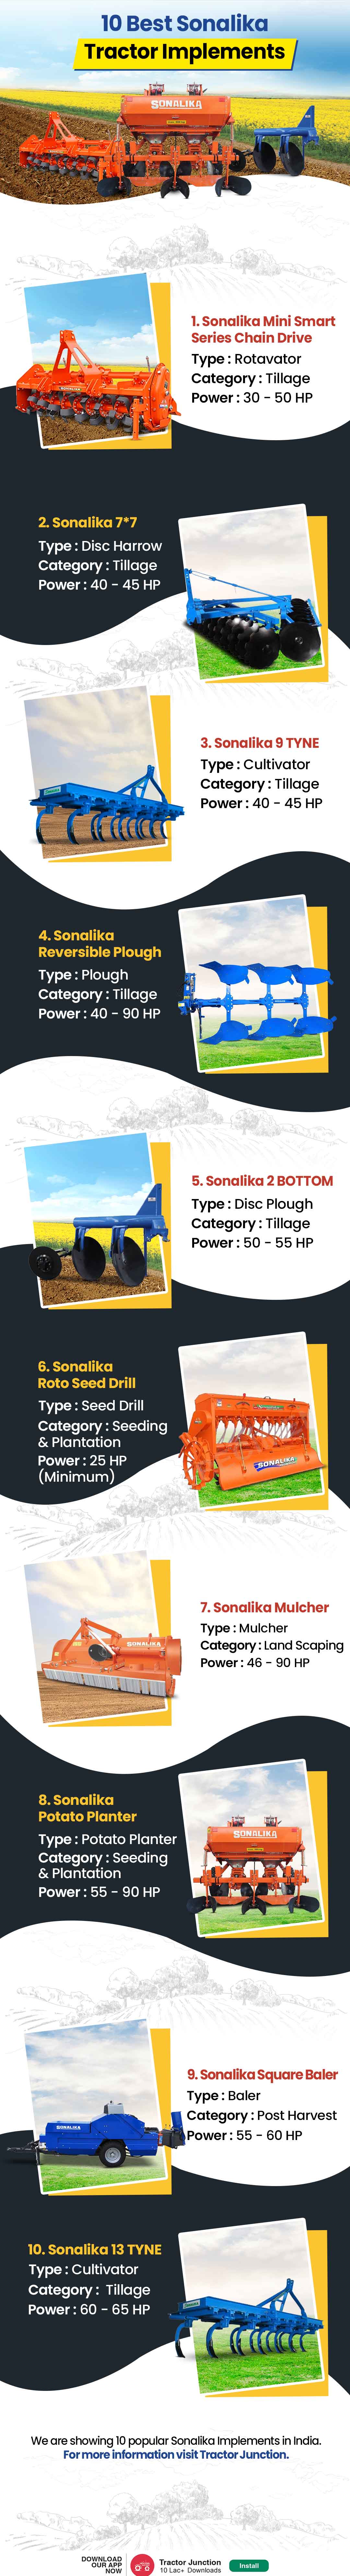 10-Best-Sonalika-Tractor-Infographic